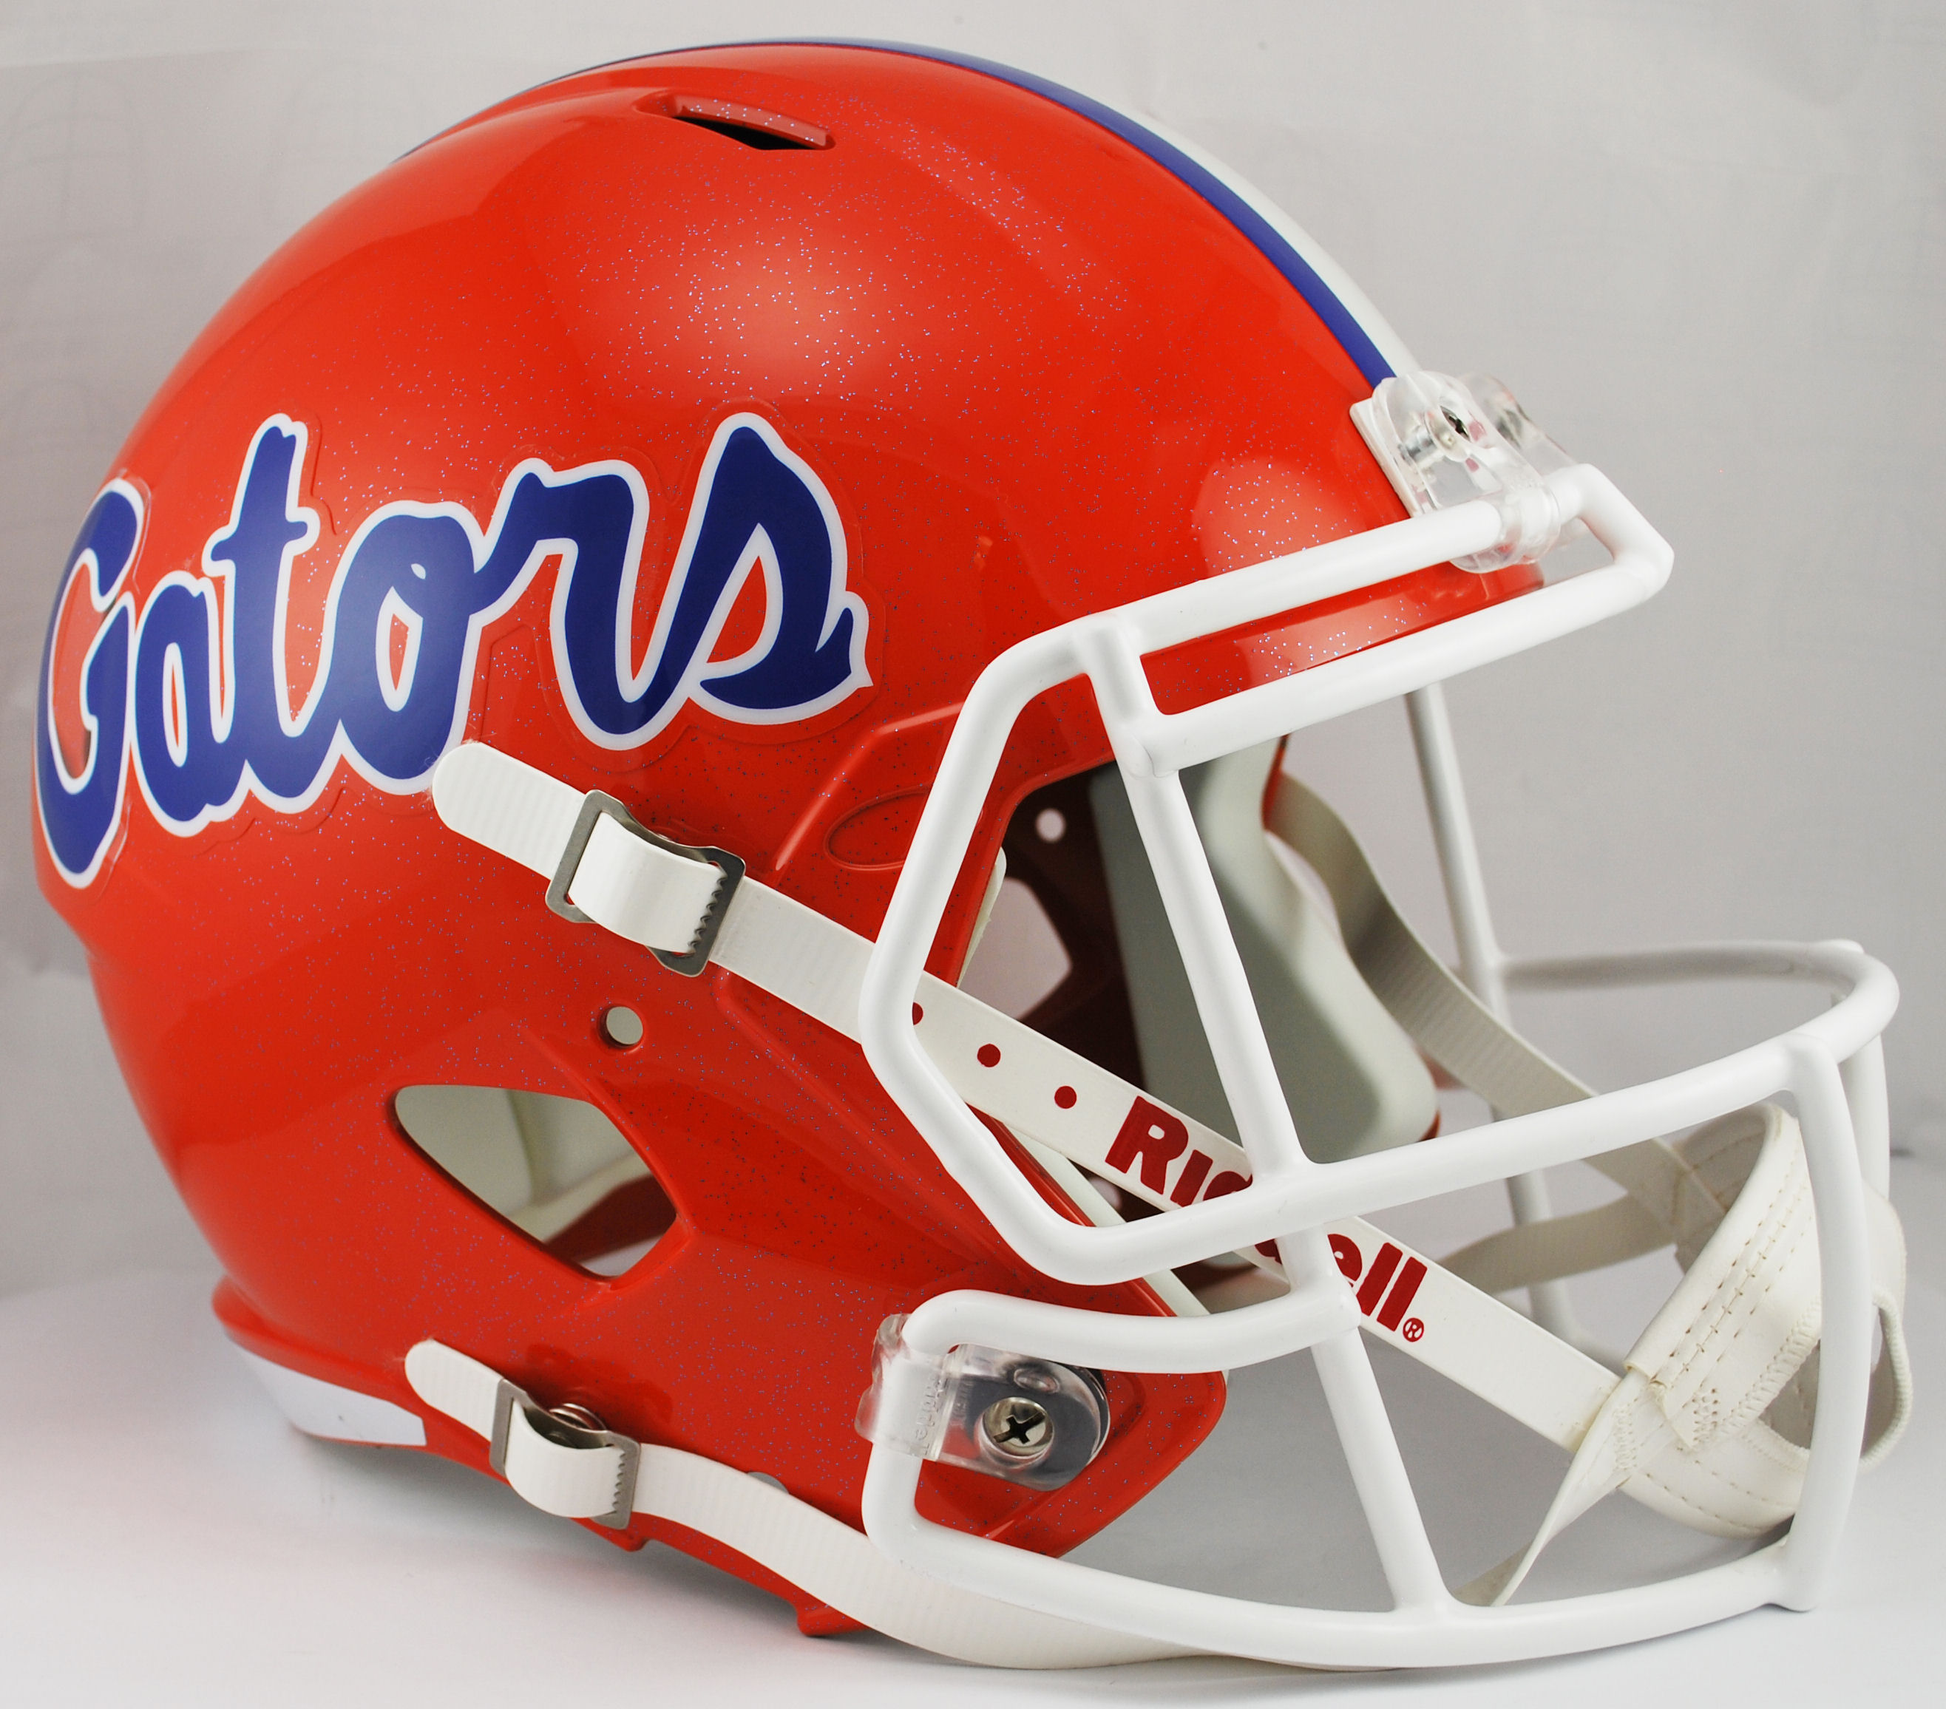 Florida Gators full size replica helmet